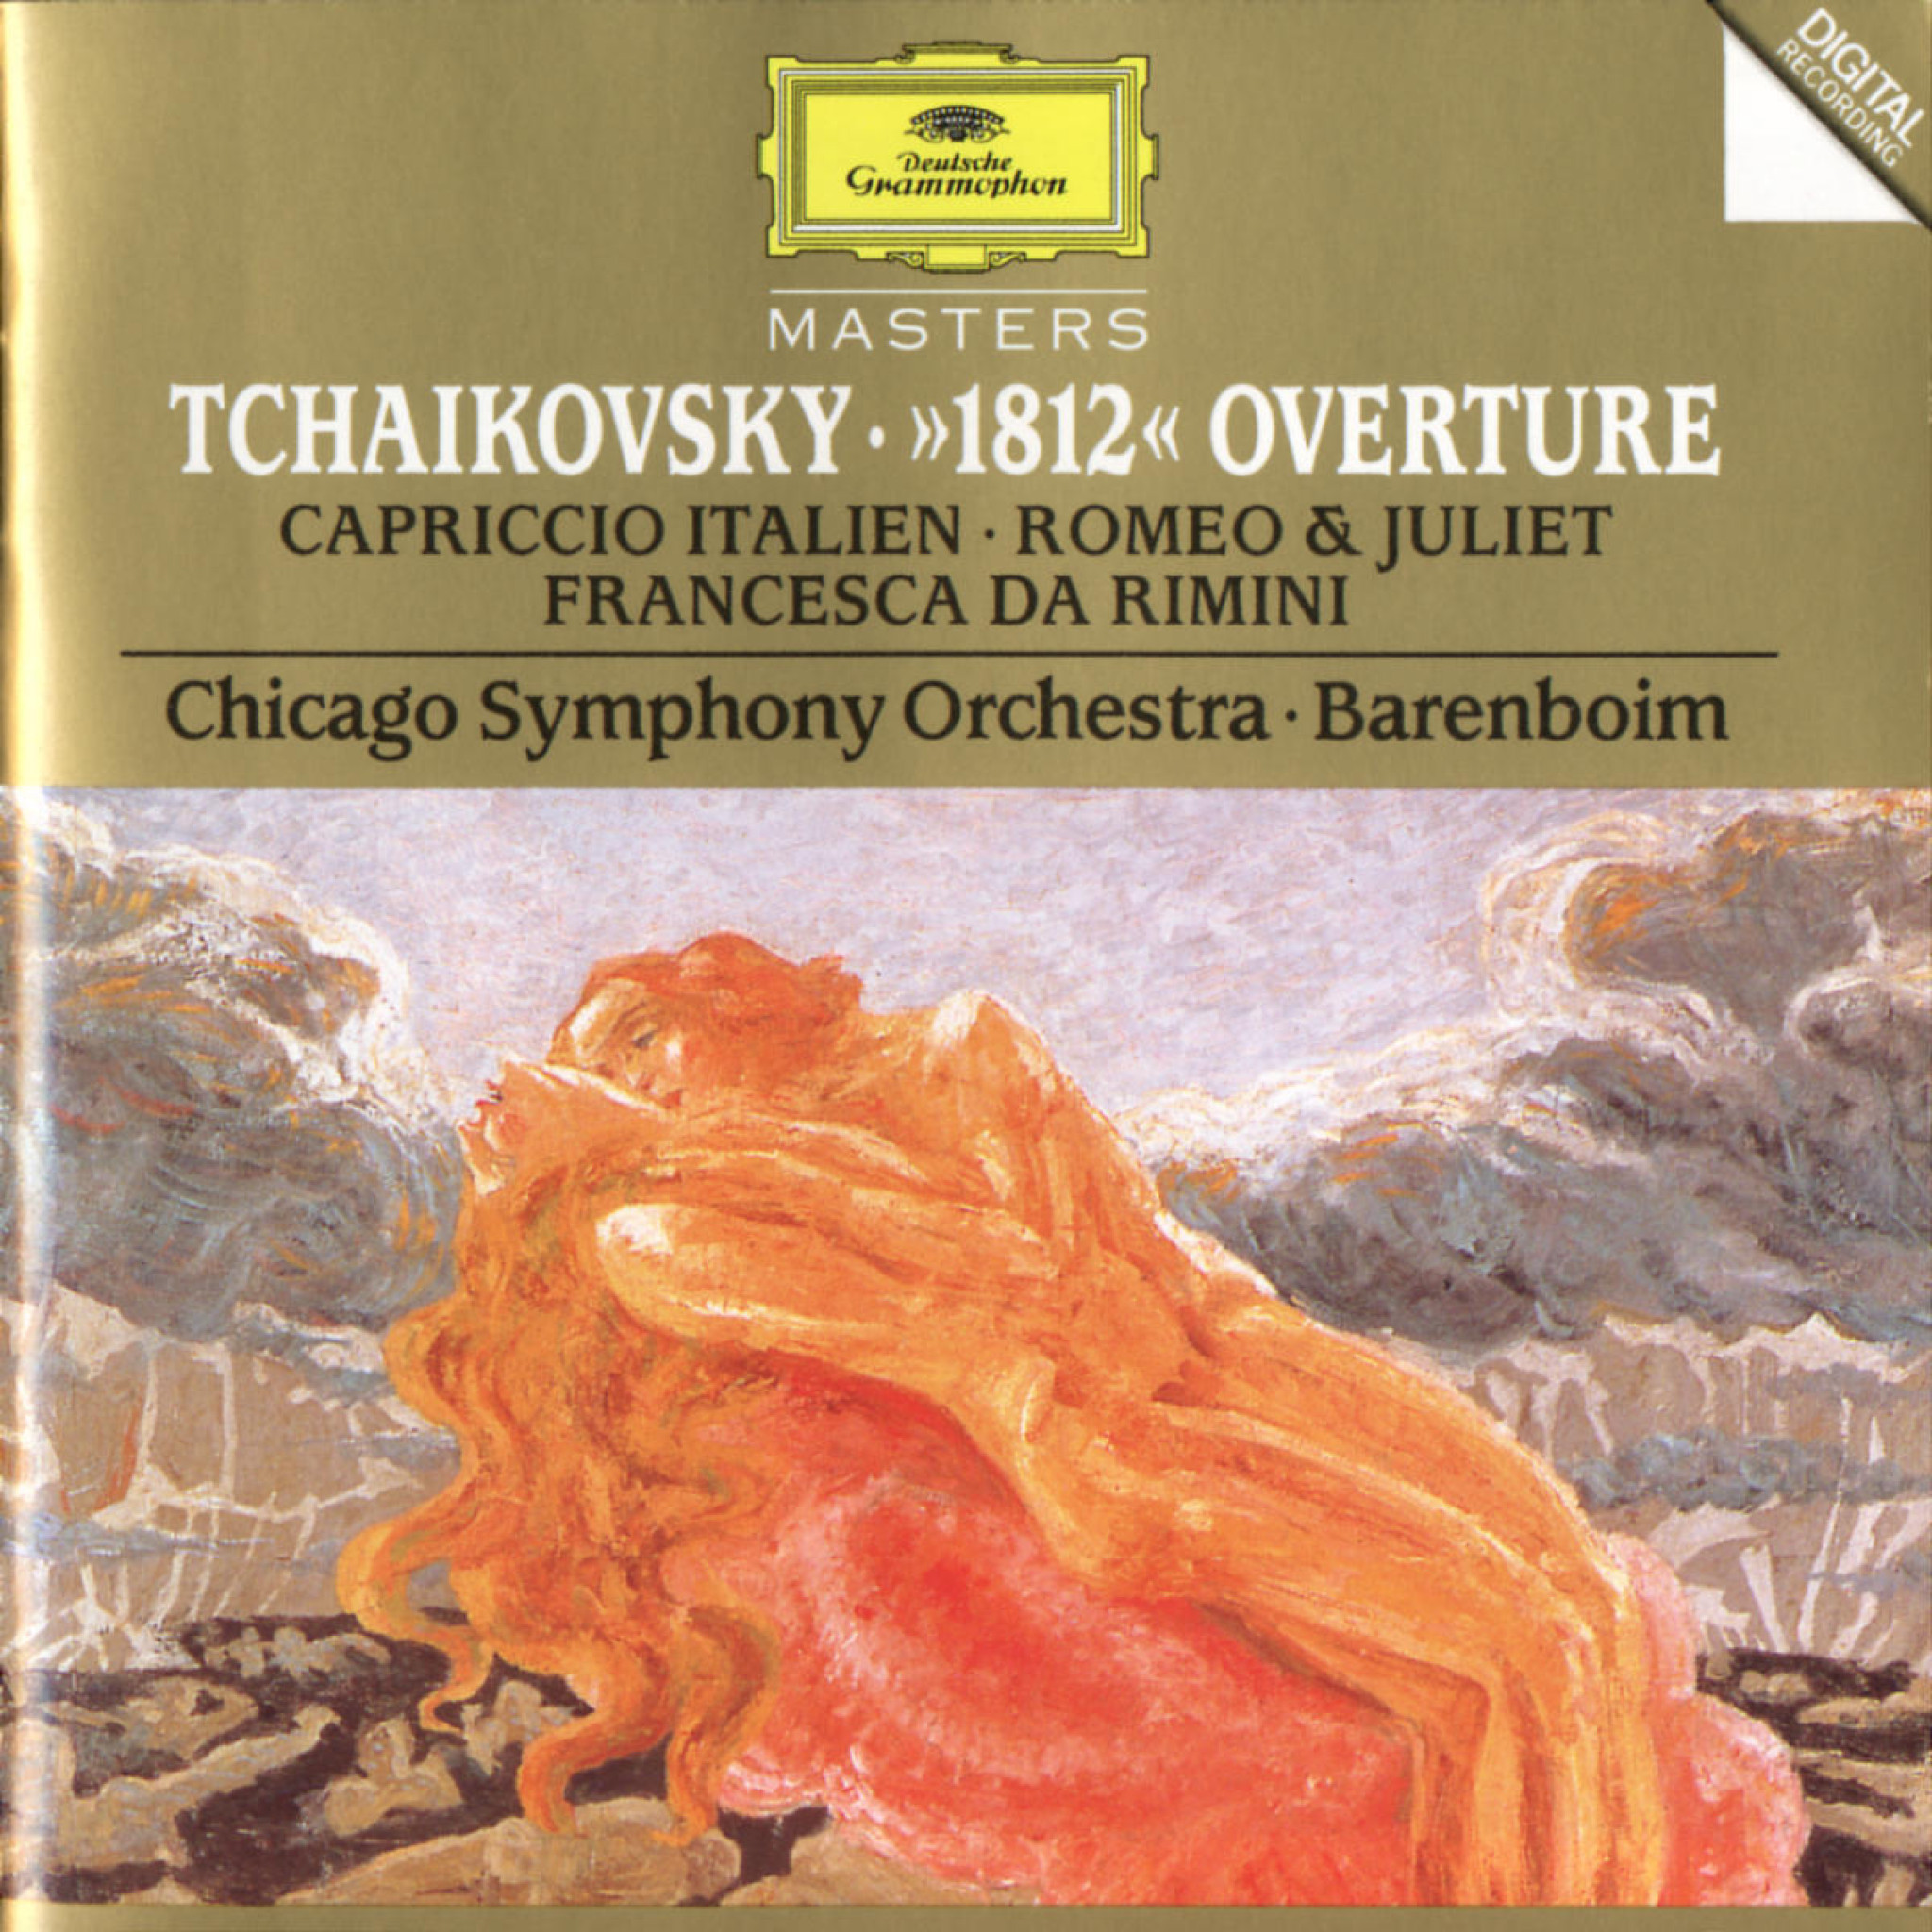 Tchaikovsky: "1812" Overture; Capriccio italien; Romeo & Juliet; Francesca da Rimini 0028944552320